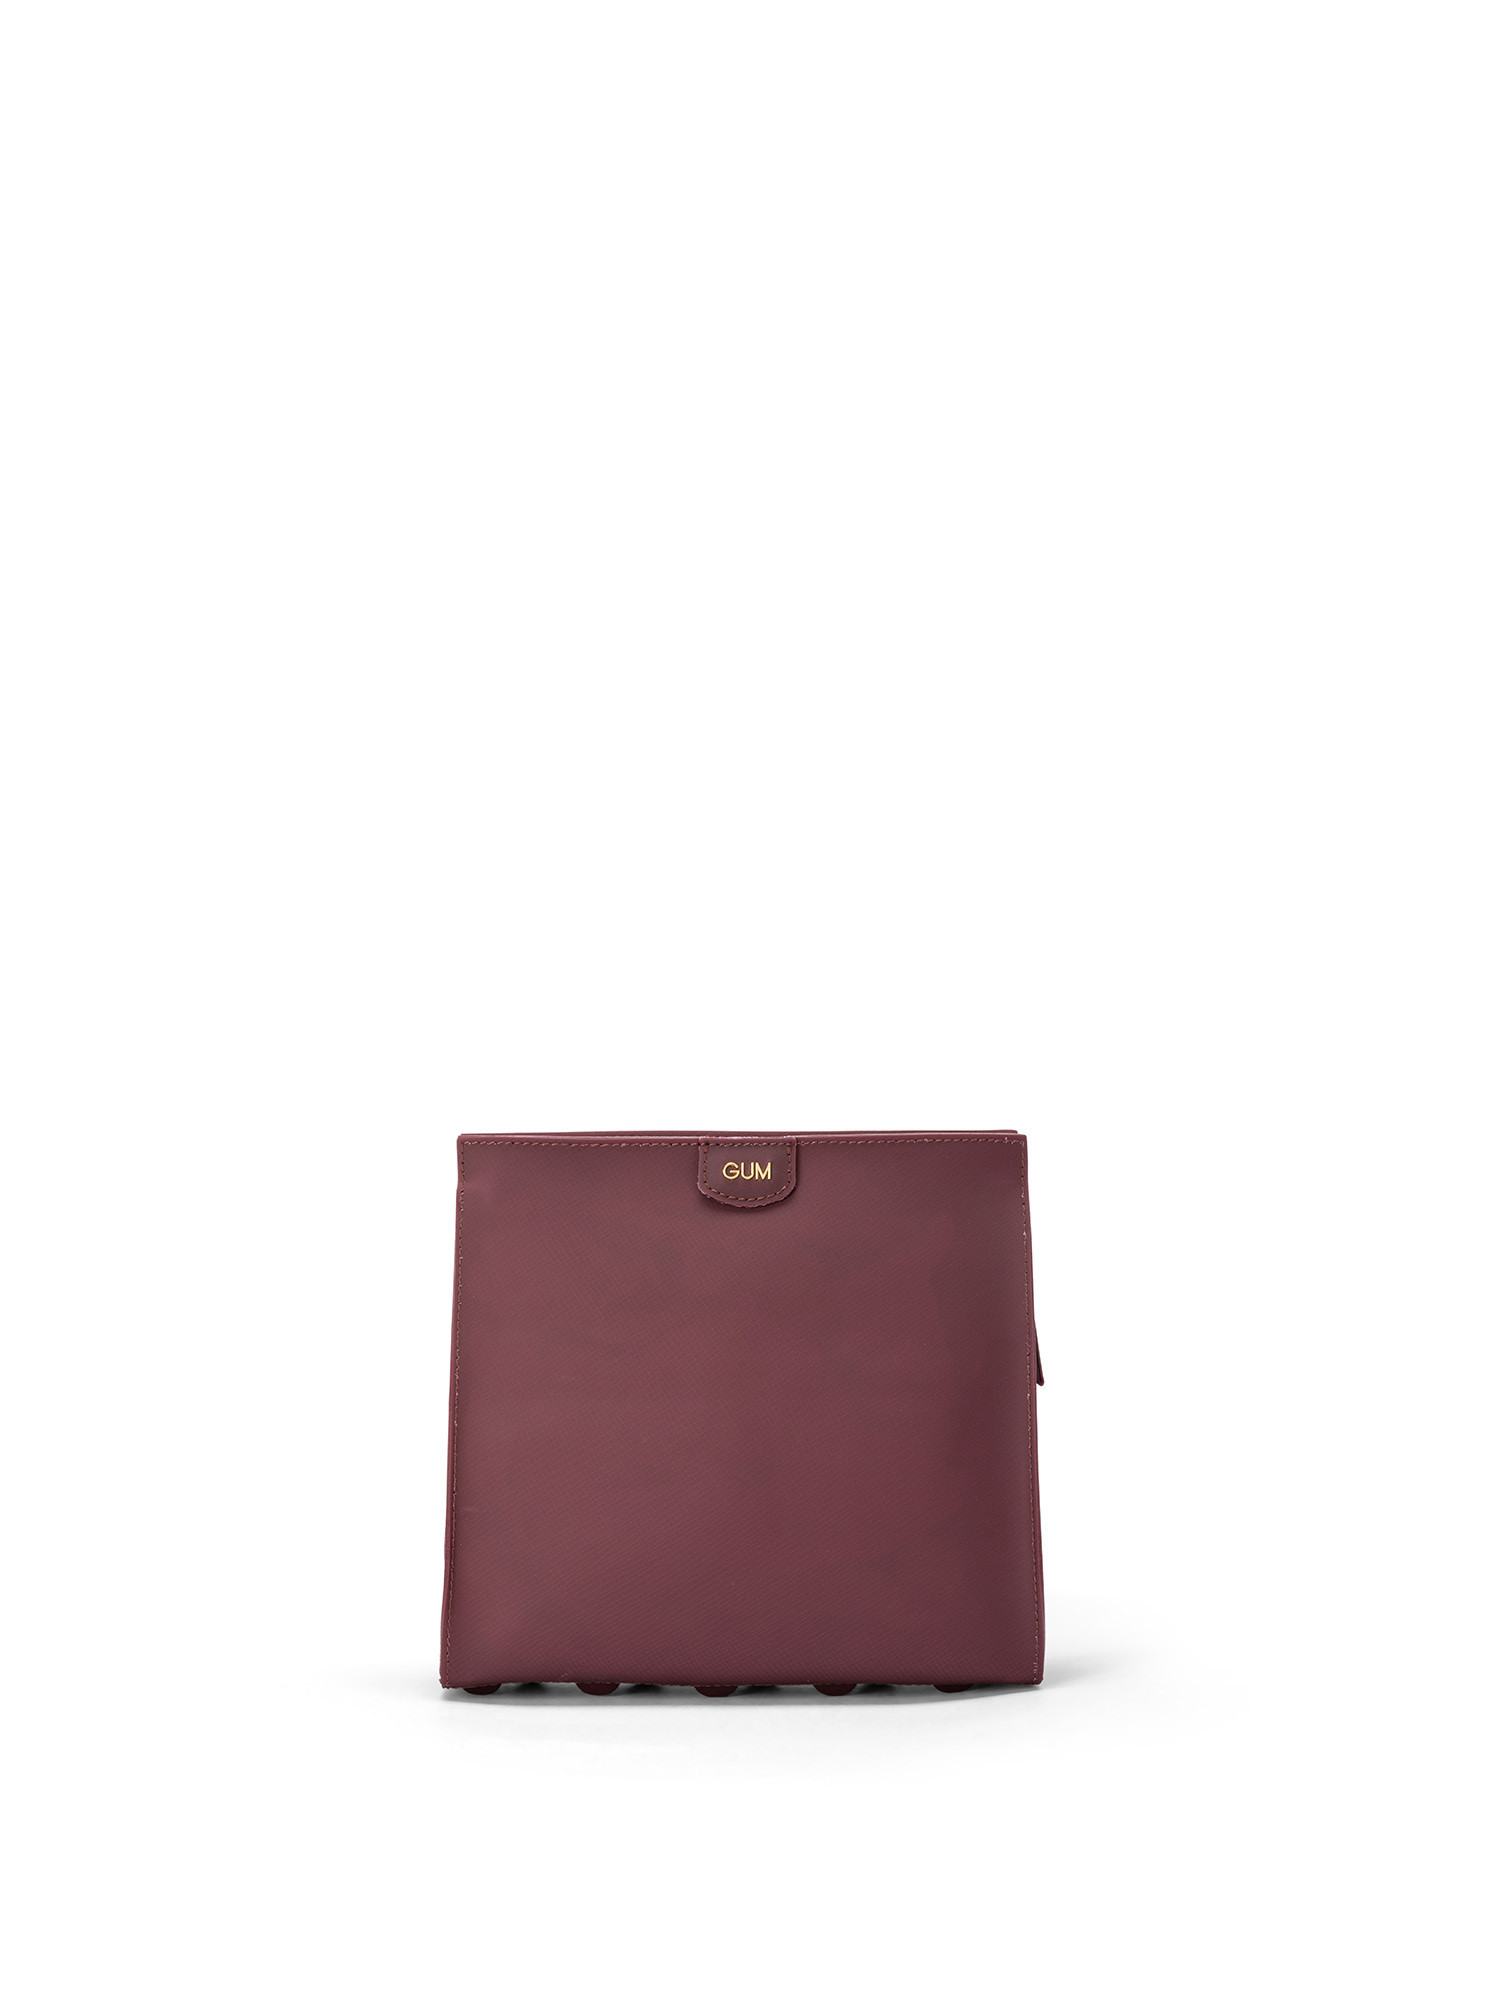 Maxi Studs bag with medium shoulder strap, Red Bordeaux, large image number 0